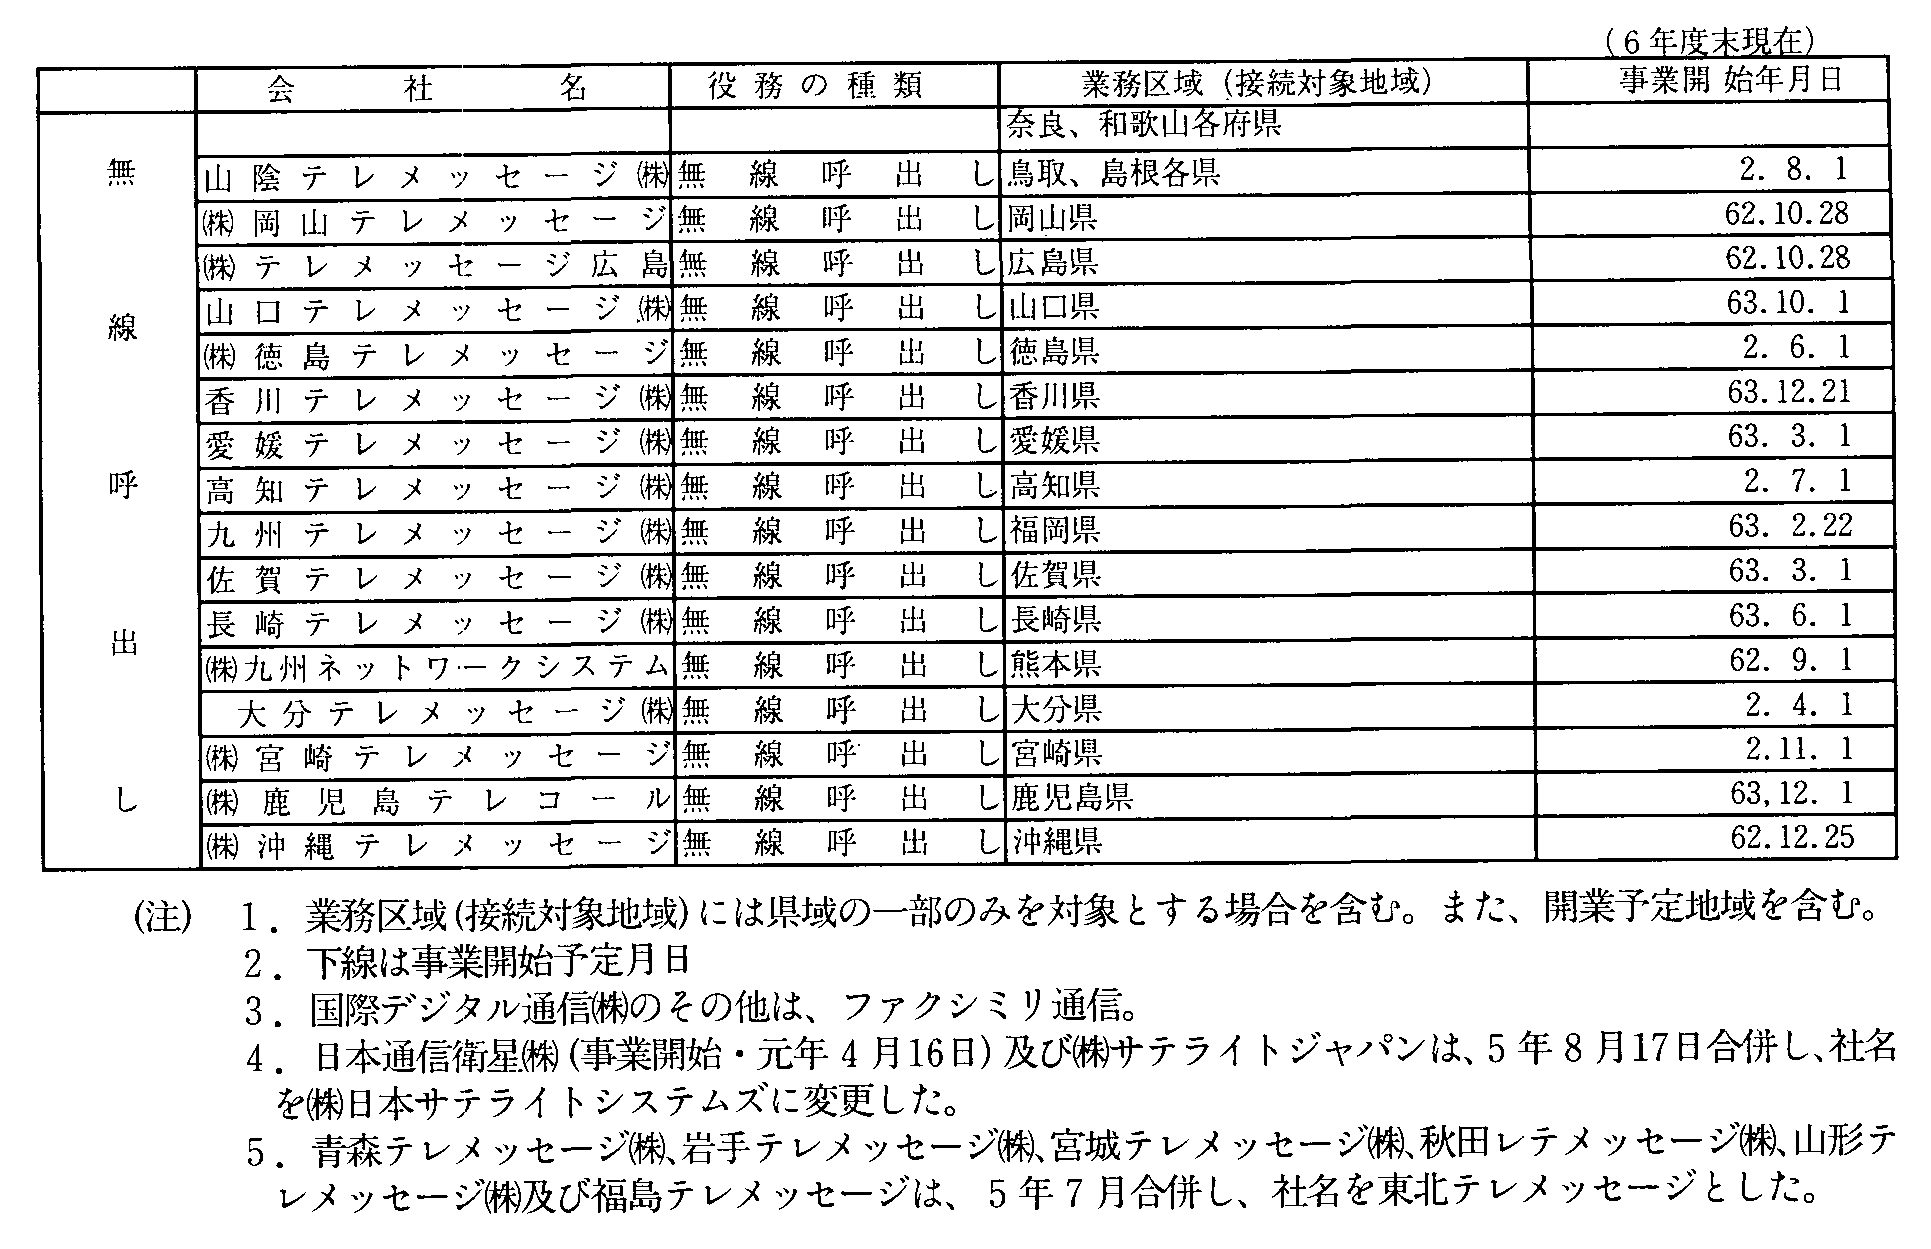 1-1 dCʐMƎ҂̊Tv(6Nx)(4)